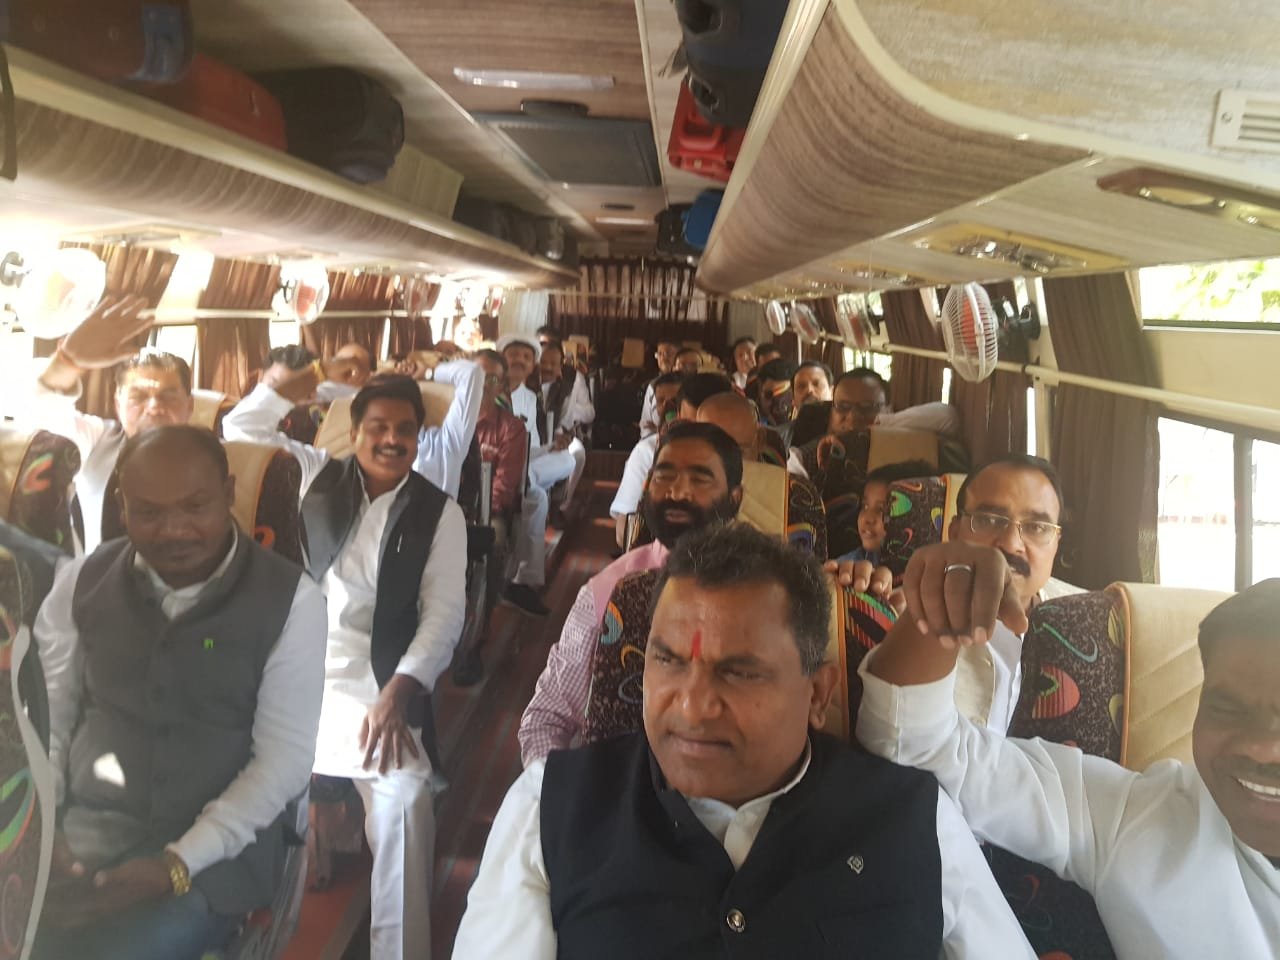 95 MLAs leave for Jaipur amid MP govt crisis: Cong sources